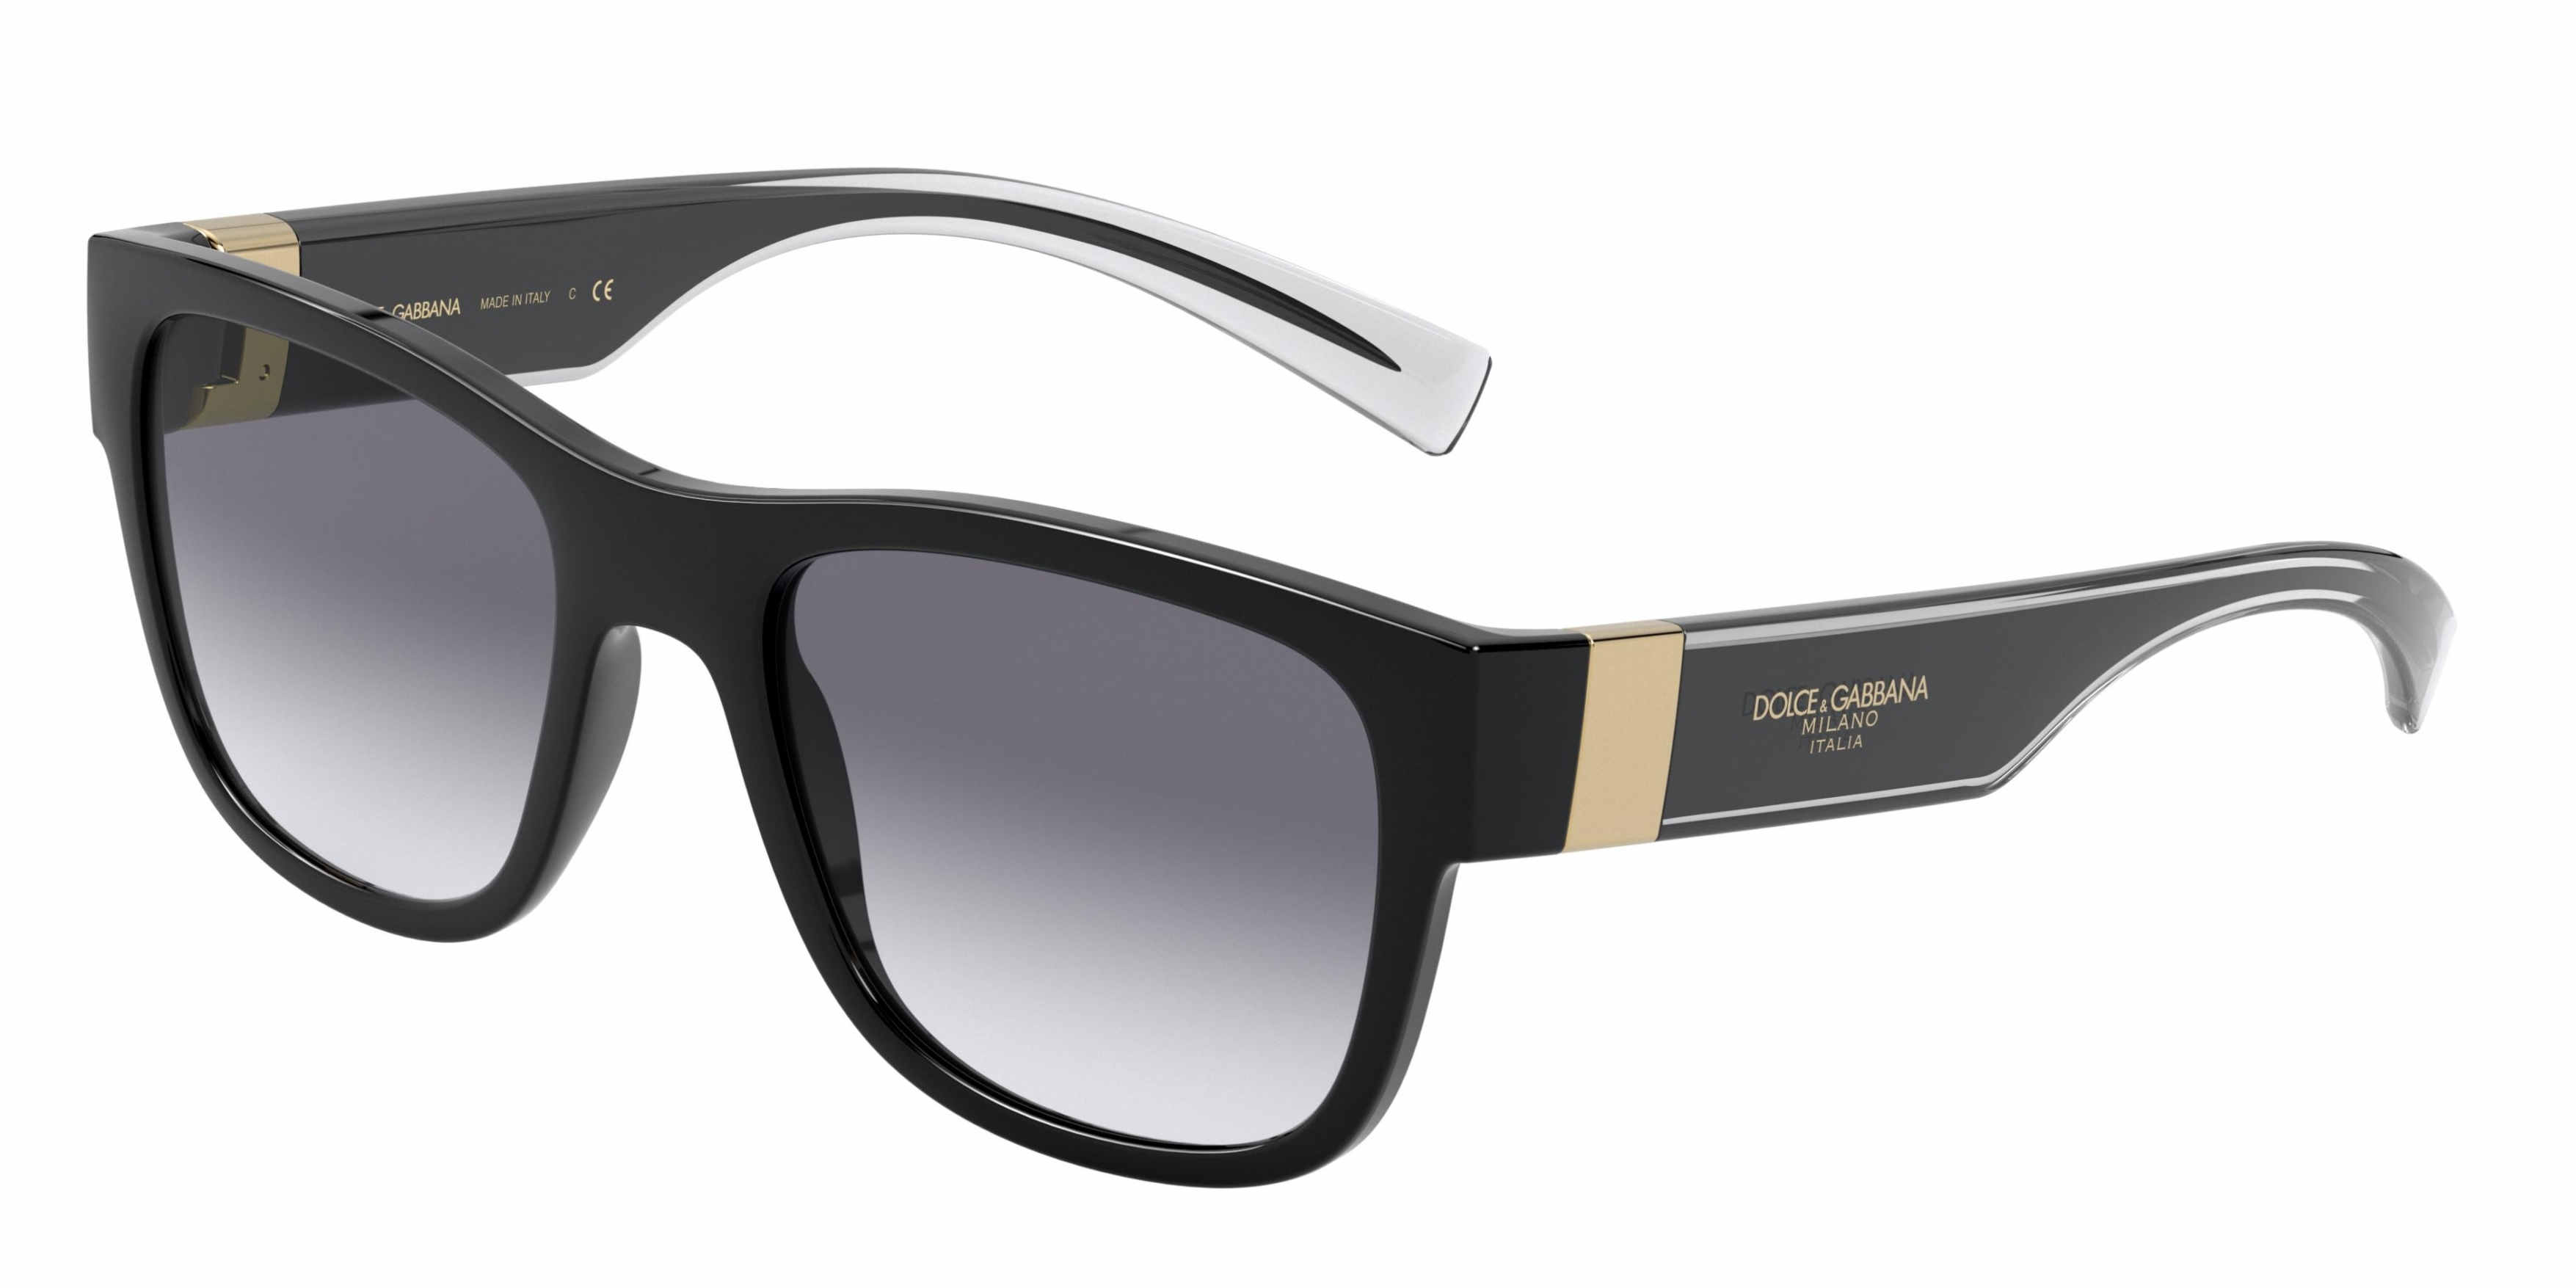 Buy Dolce Gabbana Sunglasses directly from OpticsFast.com